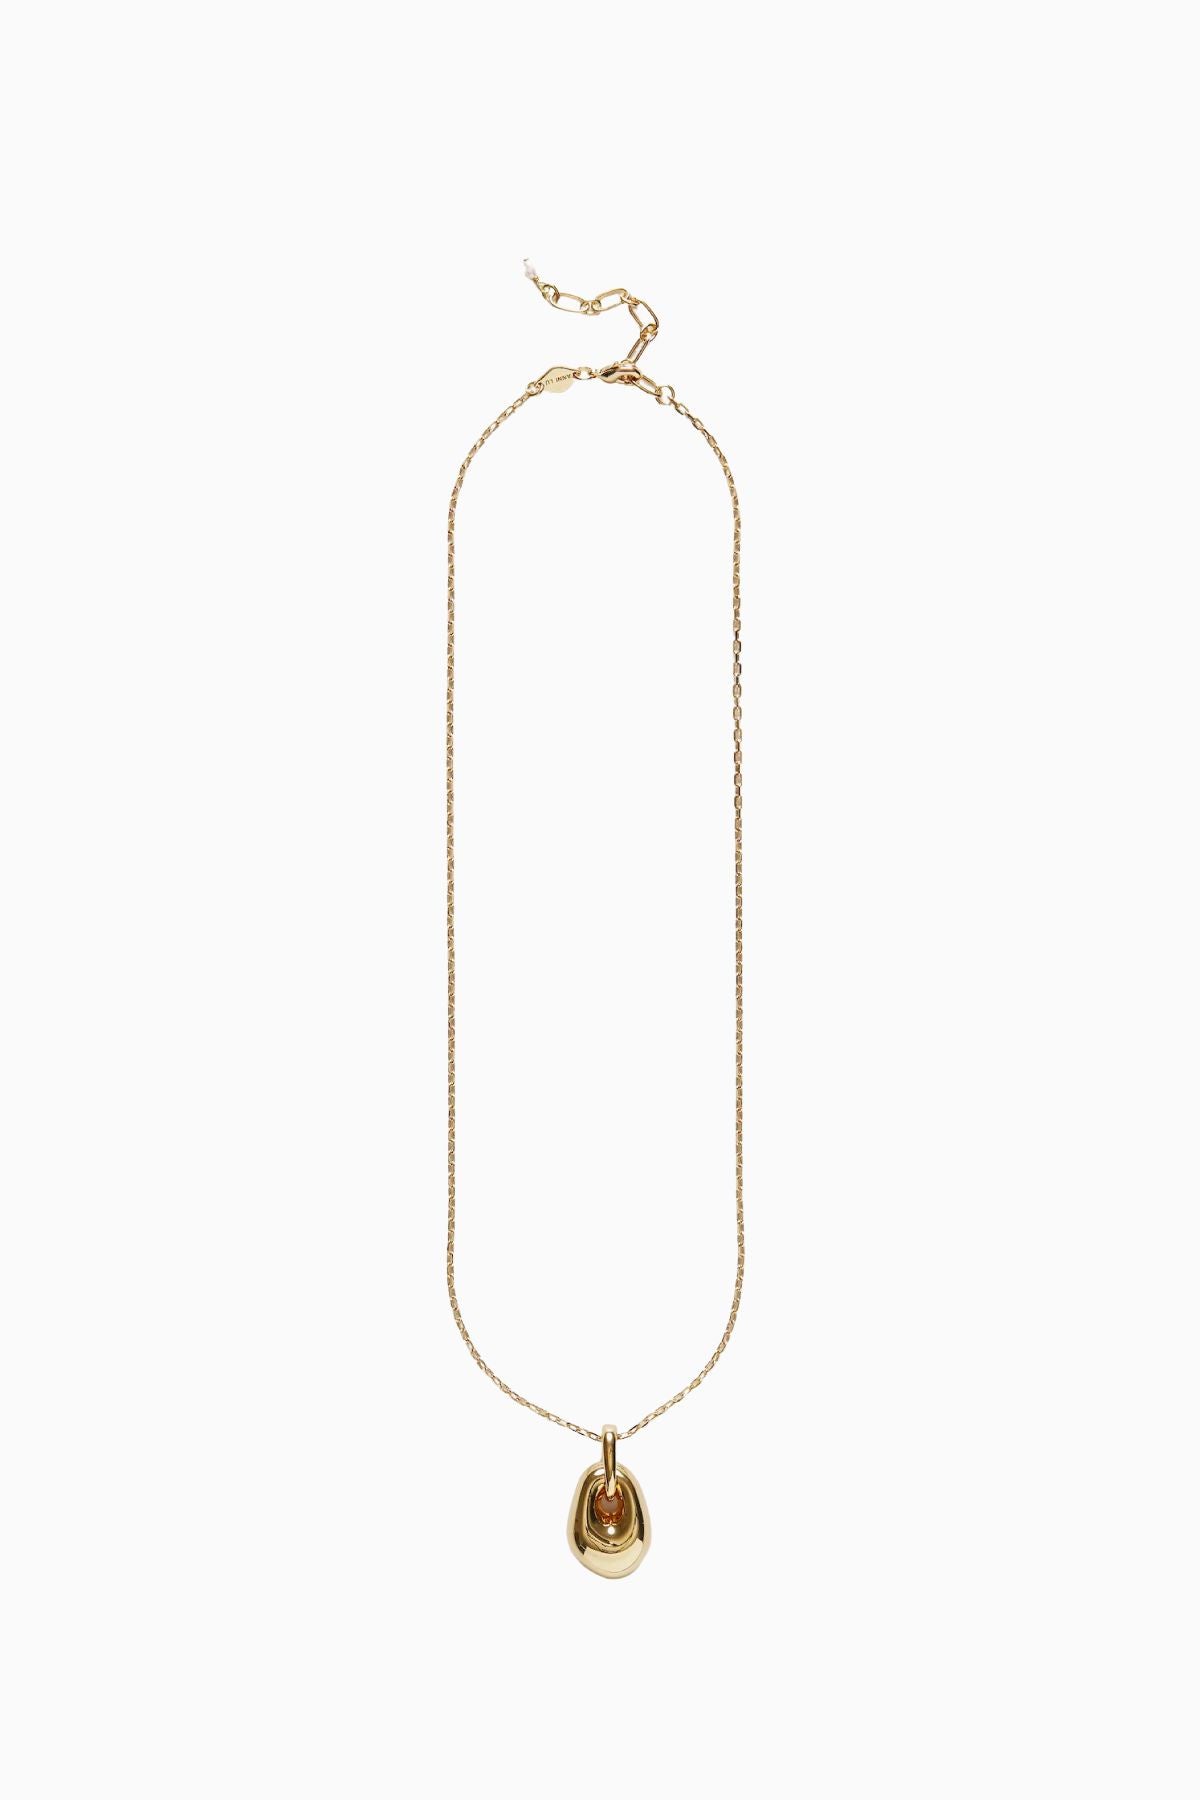 Anni Lu Golden Pebble Necklace - Gold